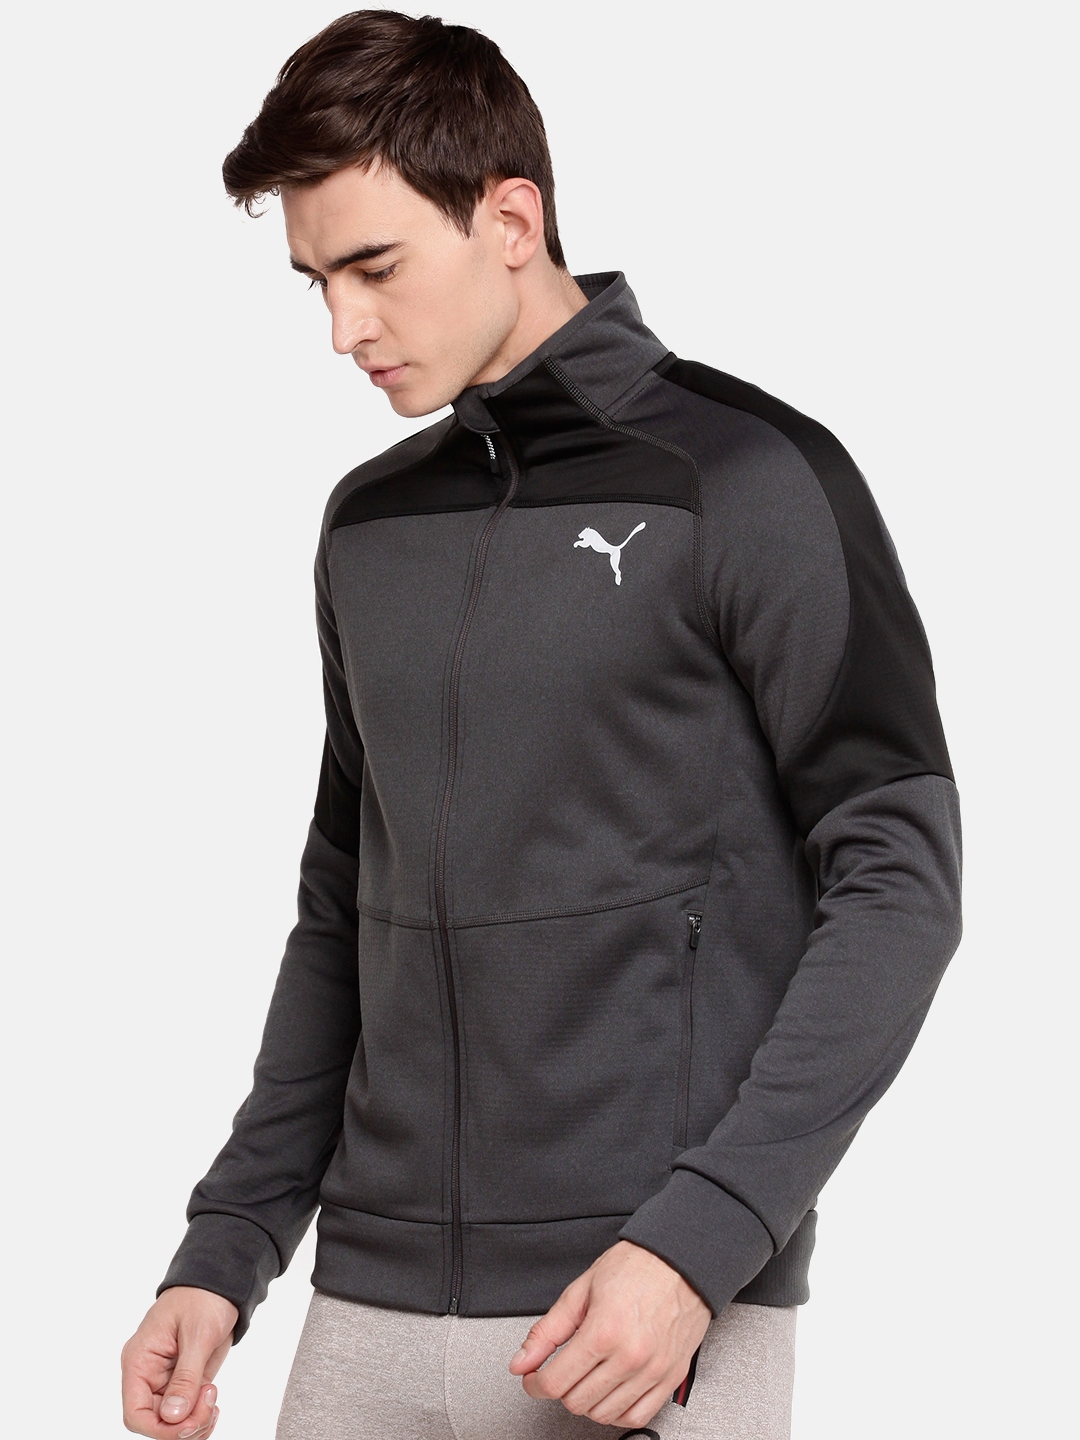 Charcoal Grey Solid Evostripe Warm Sporty Jacket